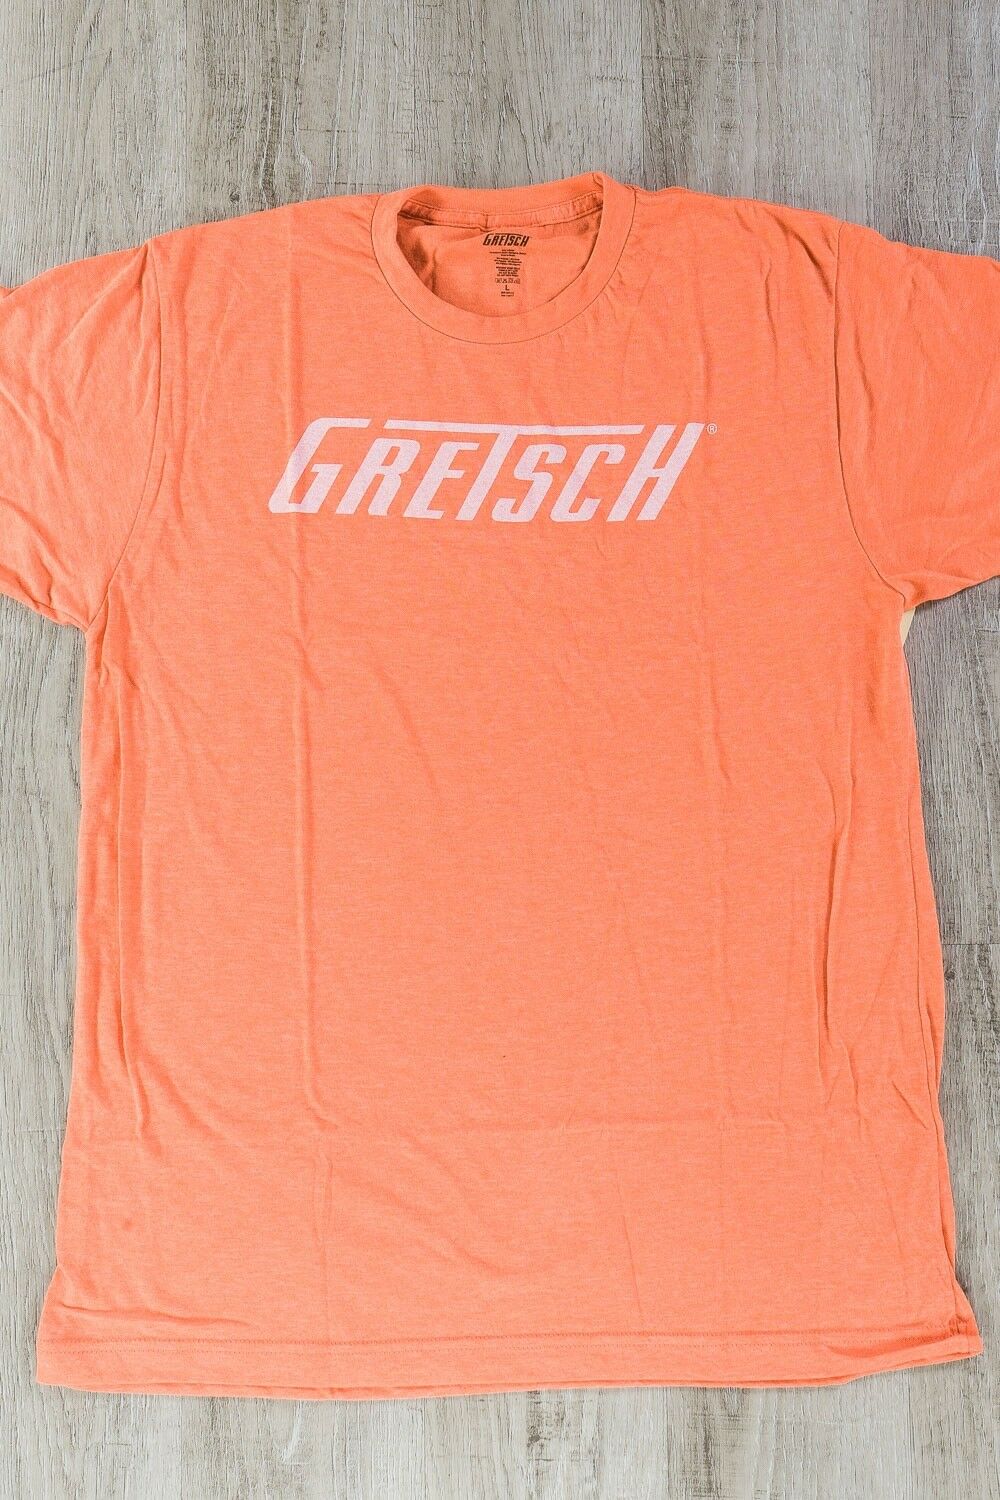 Gretsch Logo T-shirt, Orange, Extra Large (xl) Short Sleeve Tee Apparel Clothing